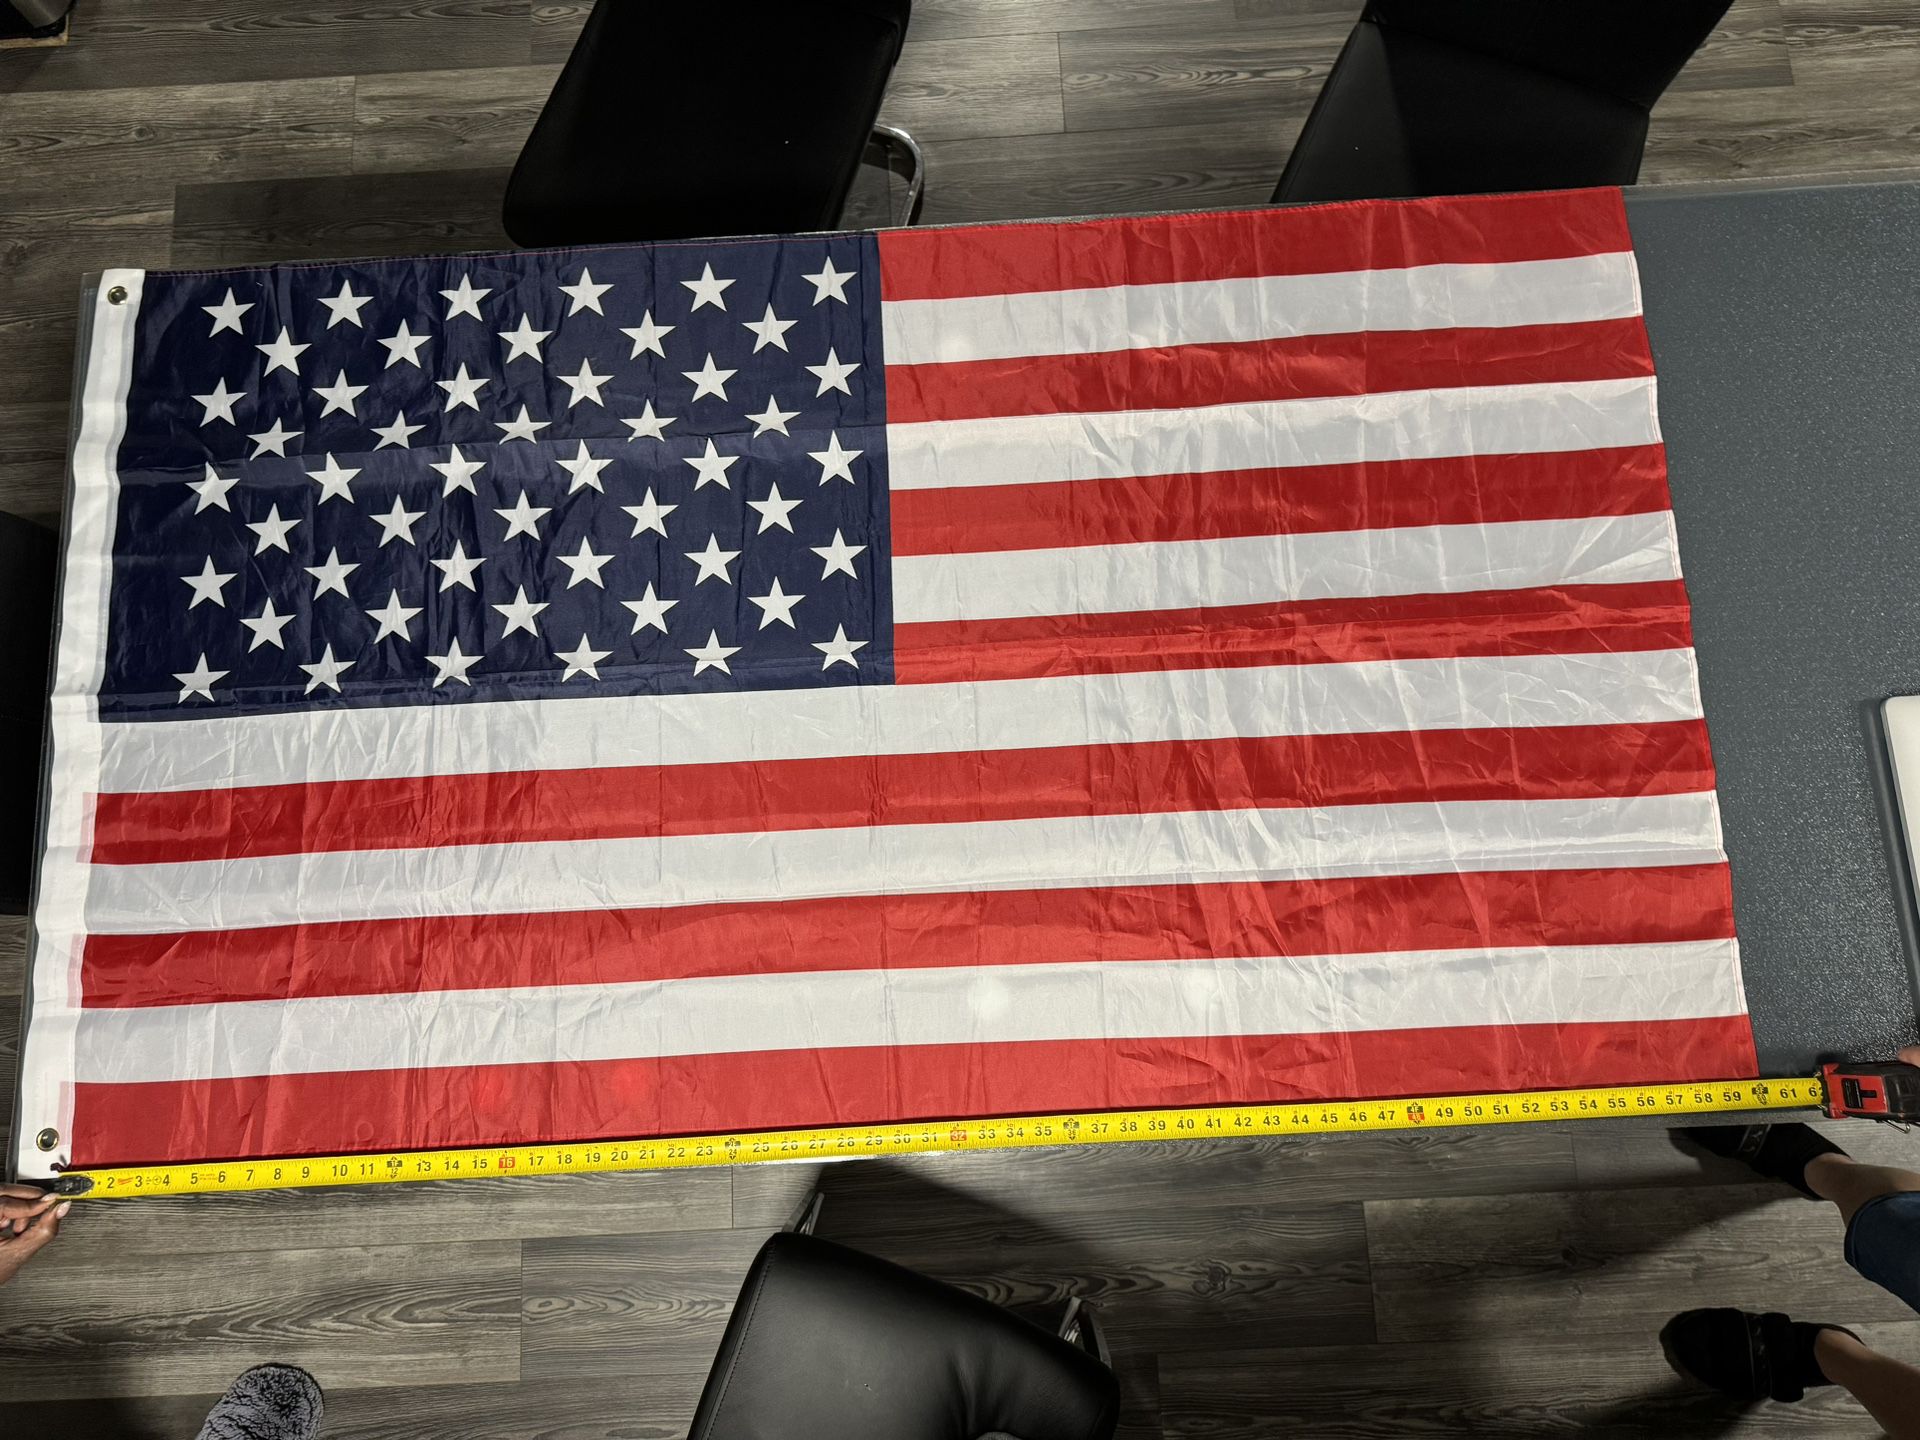 3x5 ft American Flag